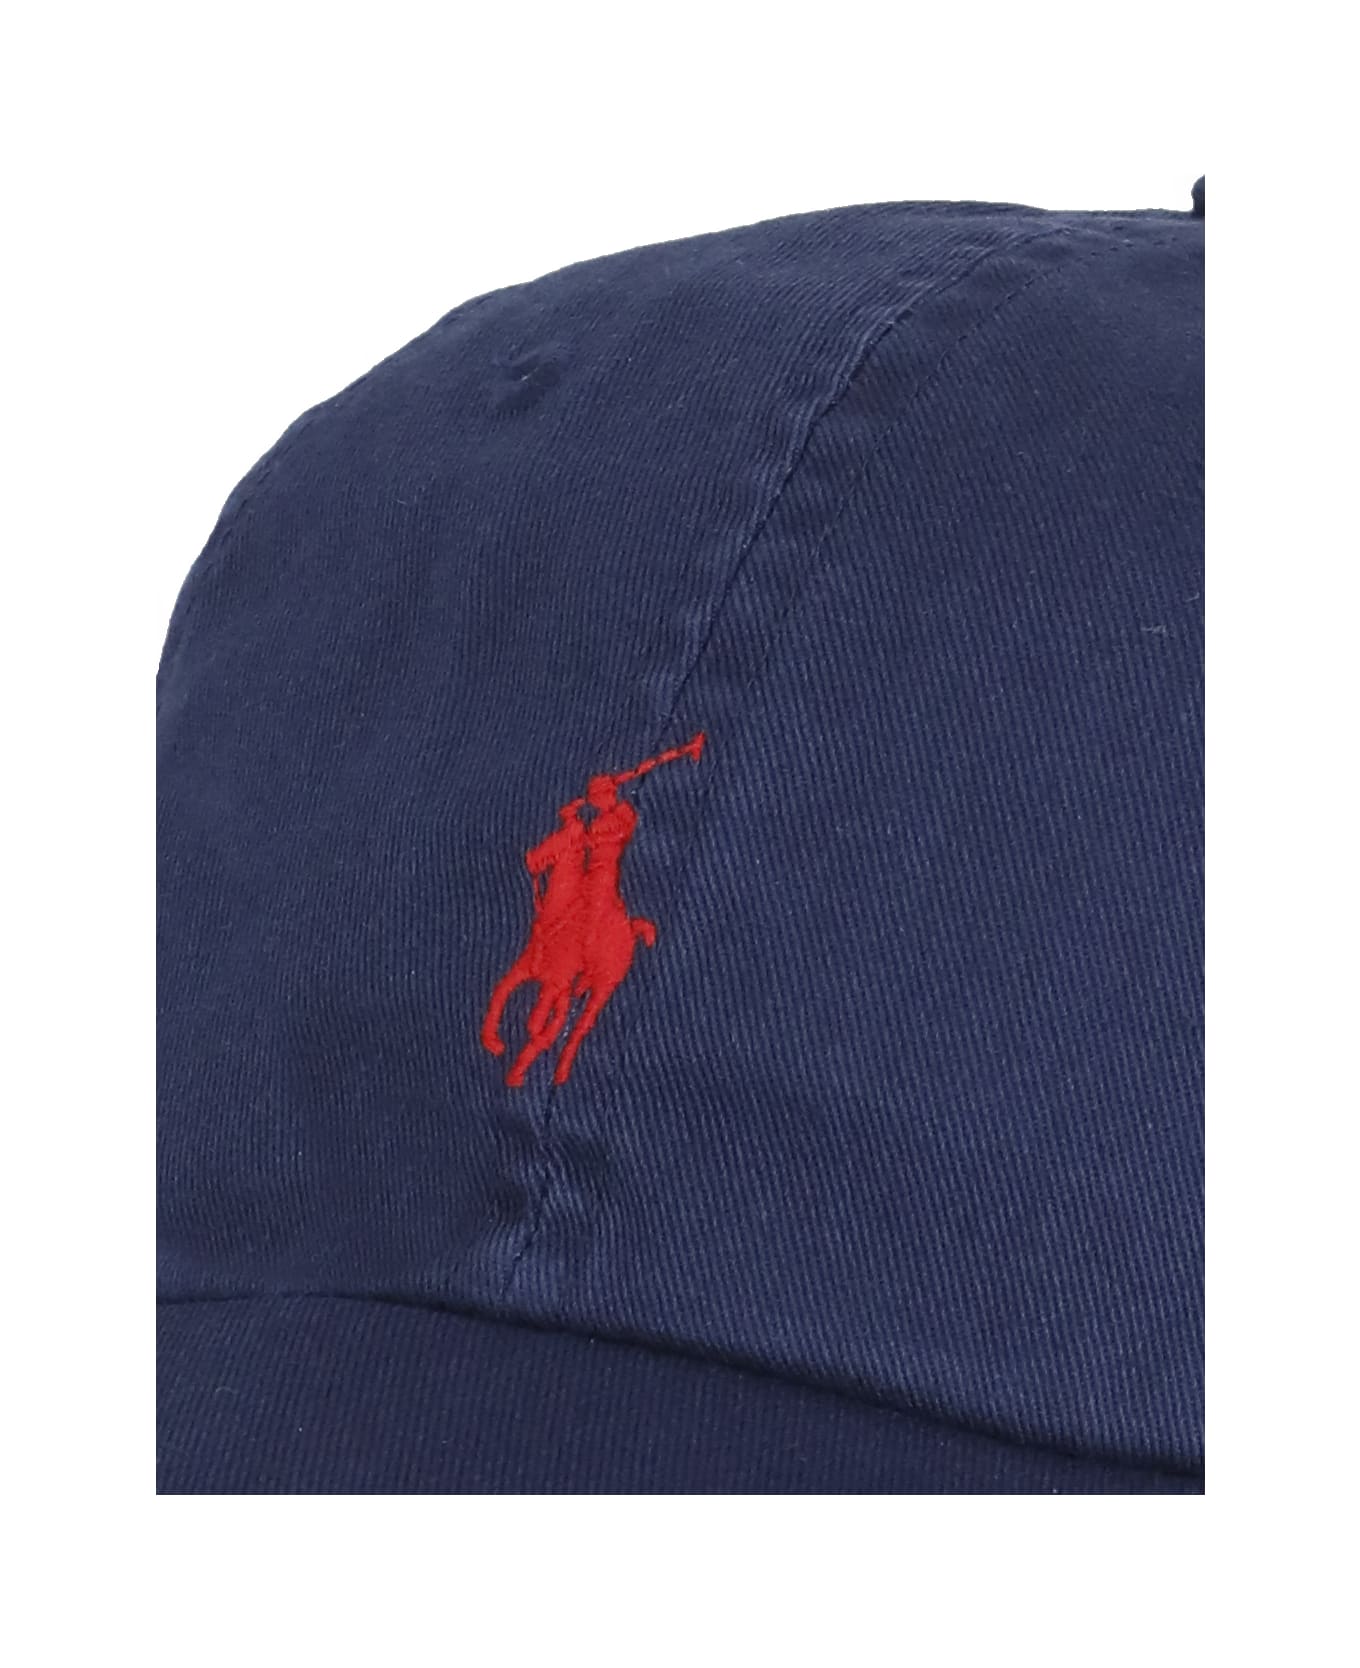 Ralph Lauren Baseball Hat With Pony - Blue 帽子